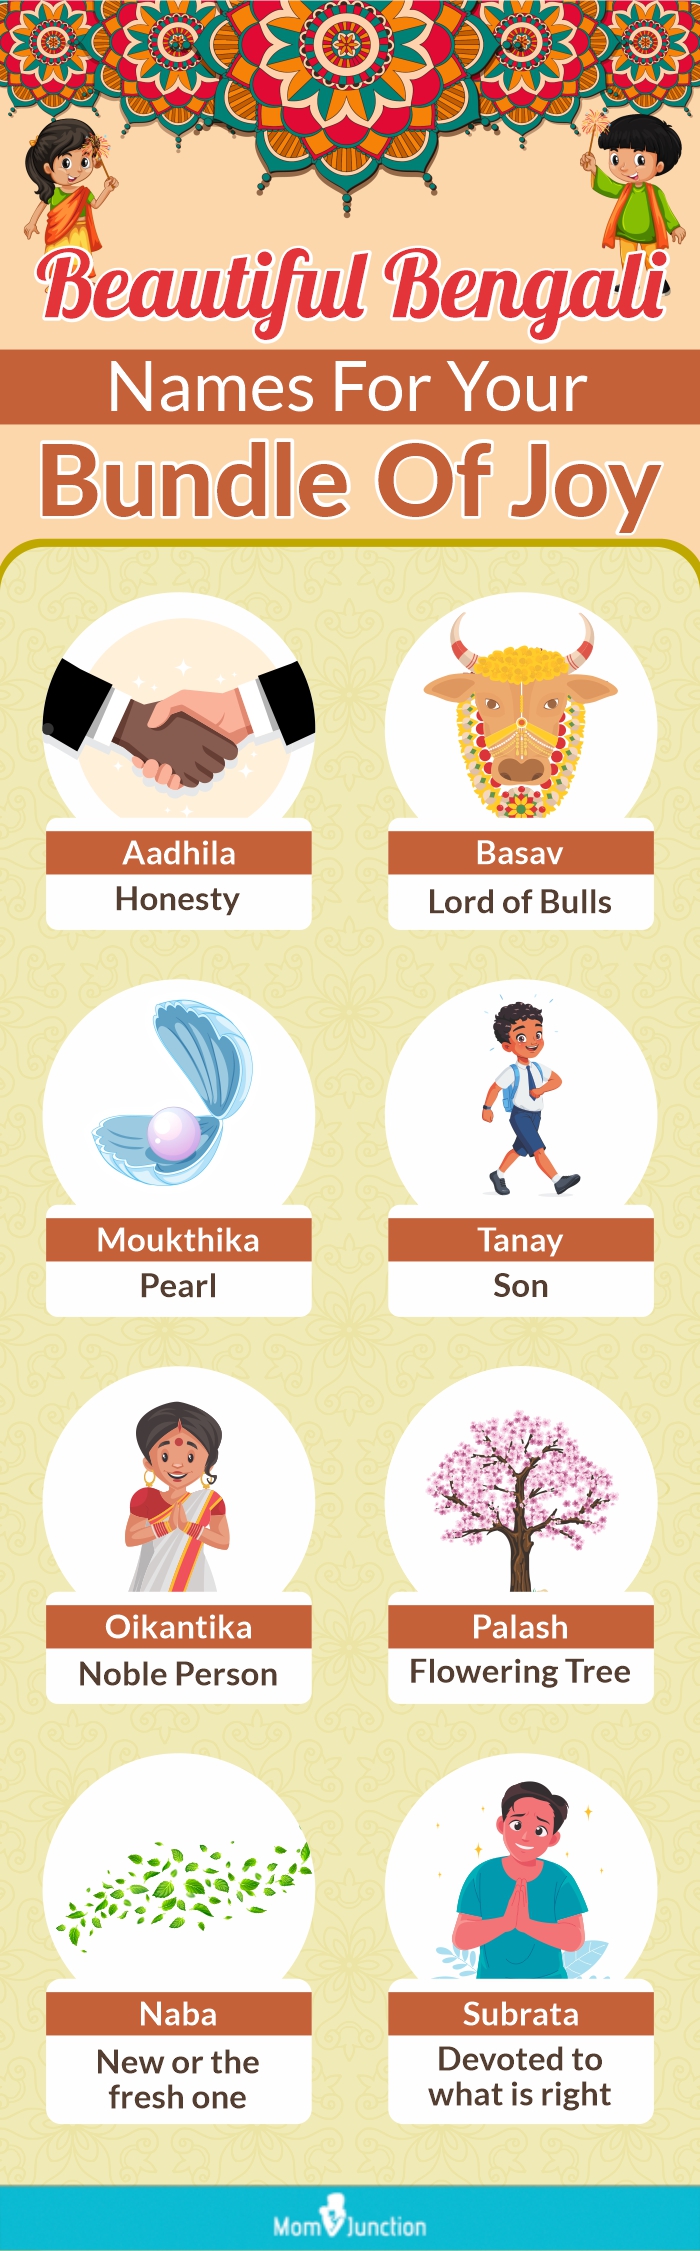 beautiful bengali names for your bundle of joy (infographic)